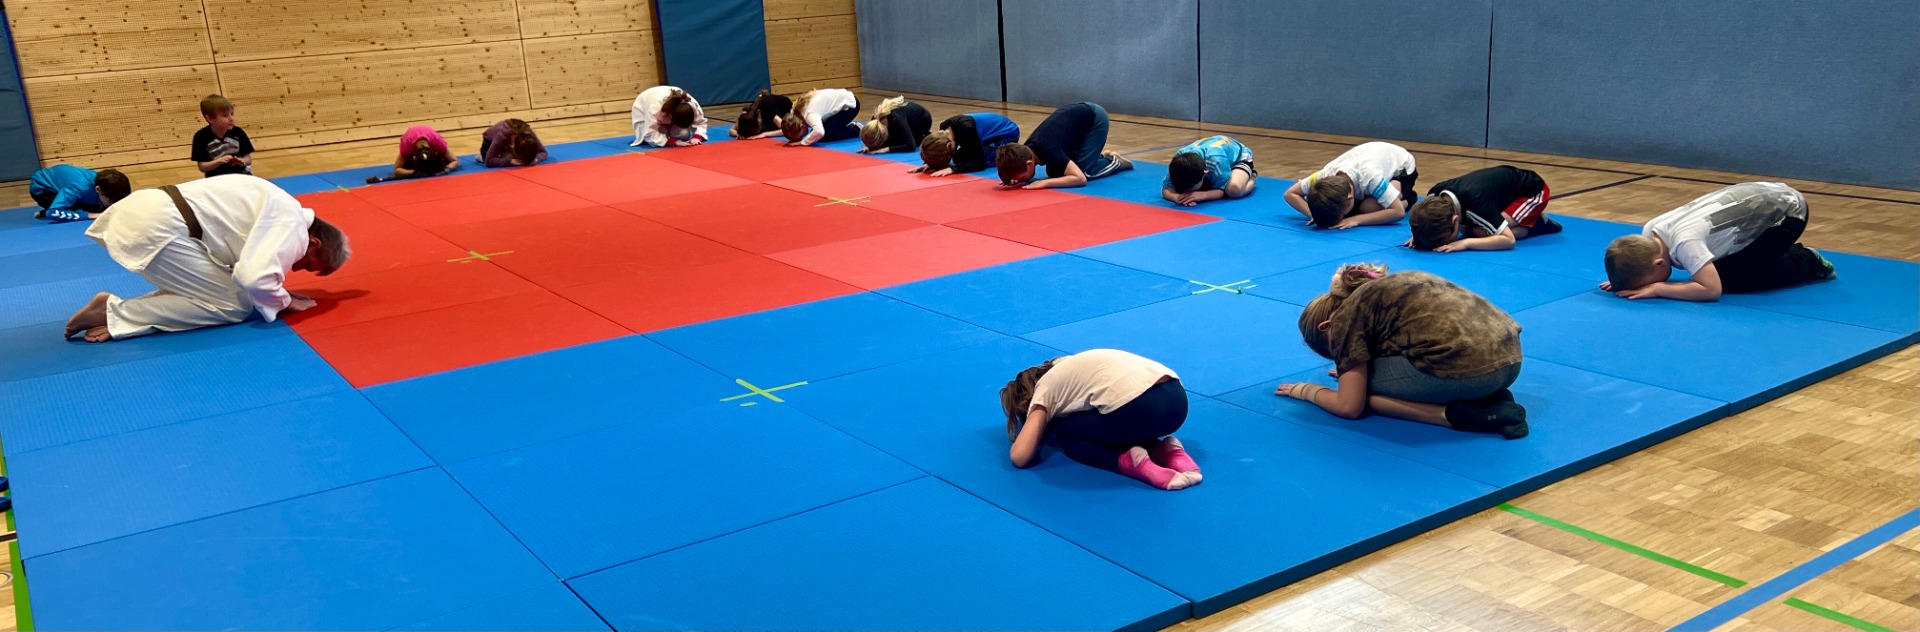 Arbeitsgemeinschaft Judo an der Grundschule Lauterhofen - Bild 1